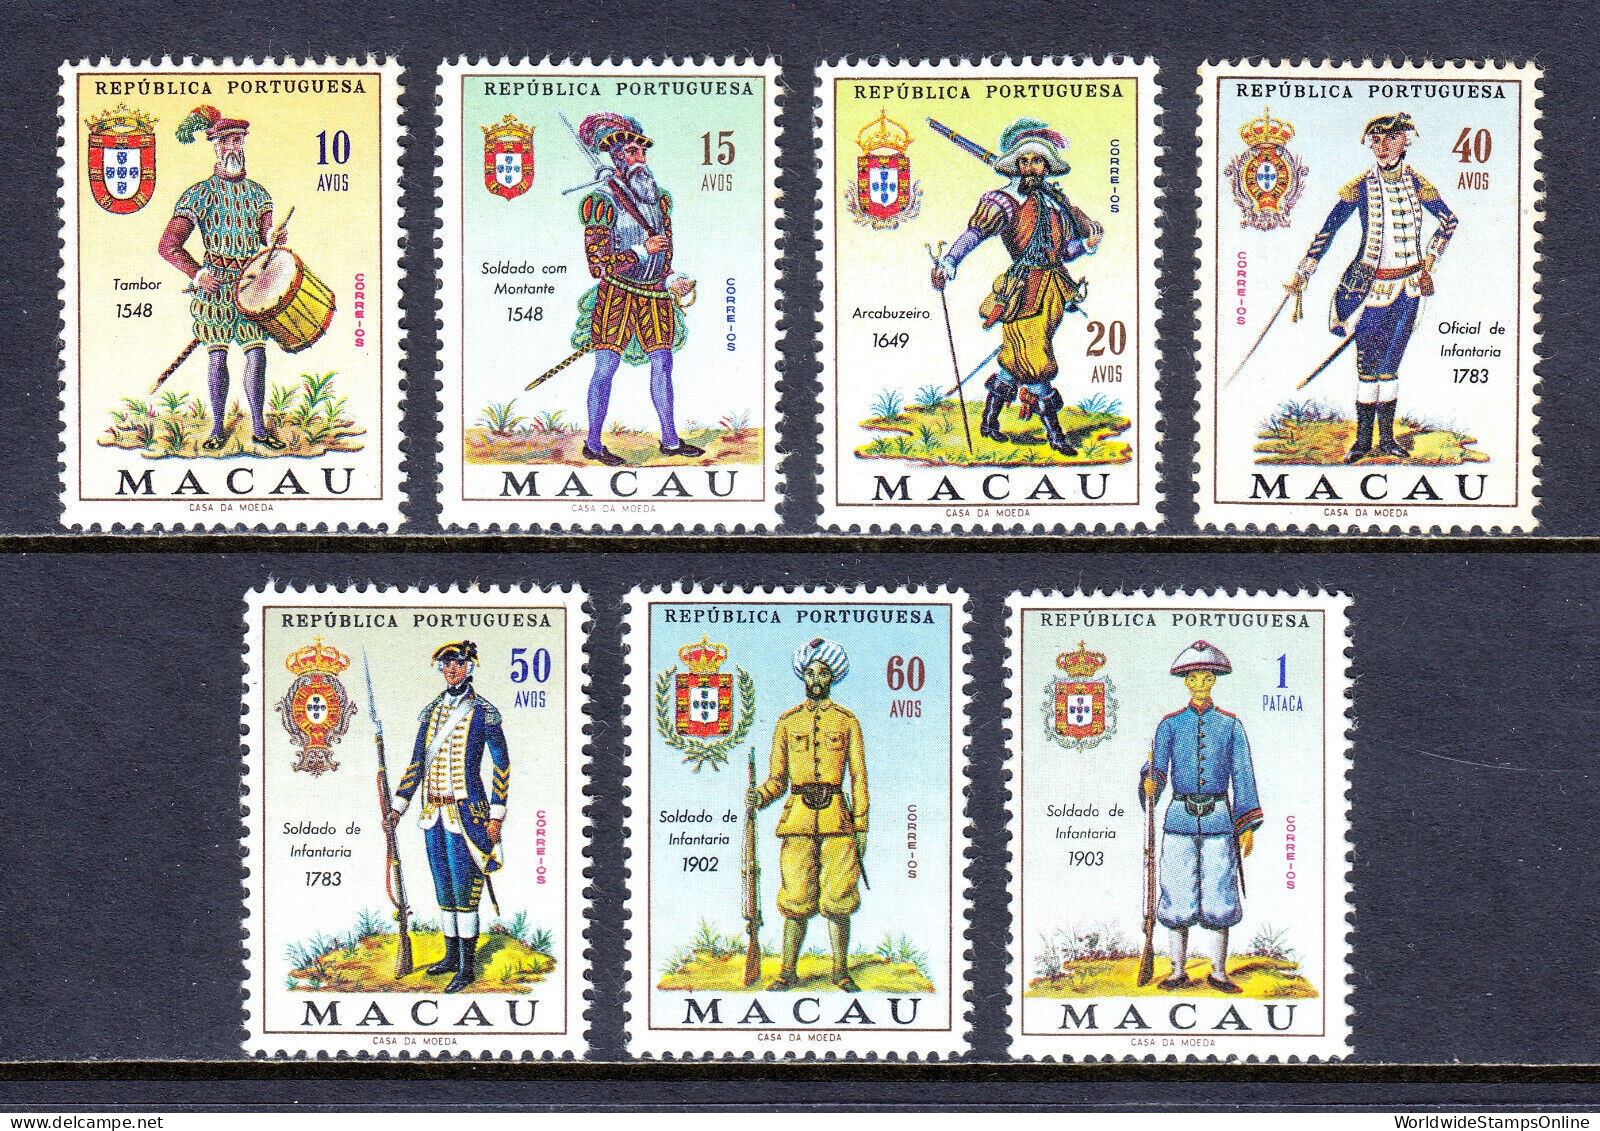 MACAO — SCOTT 404/410 —  1966 MILITARY UNIFORMS ISSUE — MNH — SCV $48 - Neufs